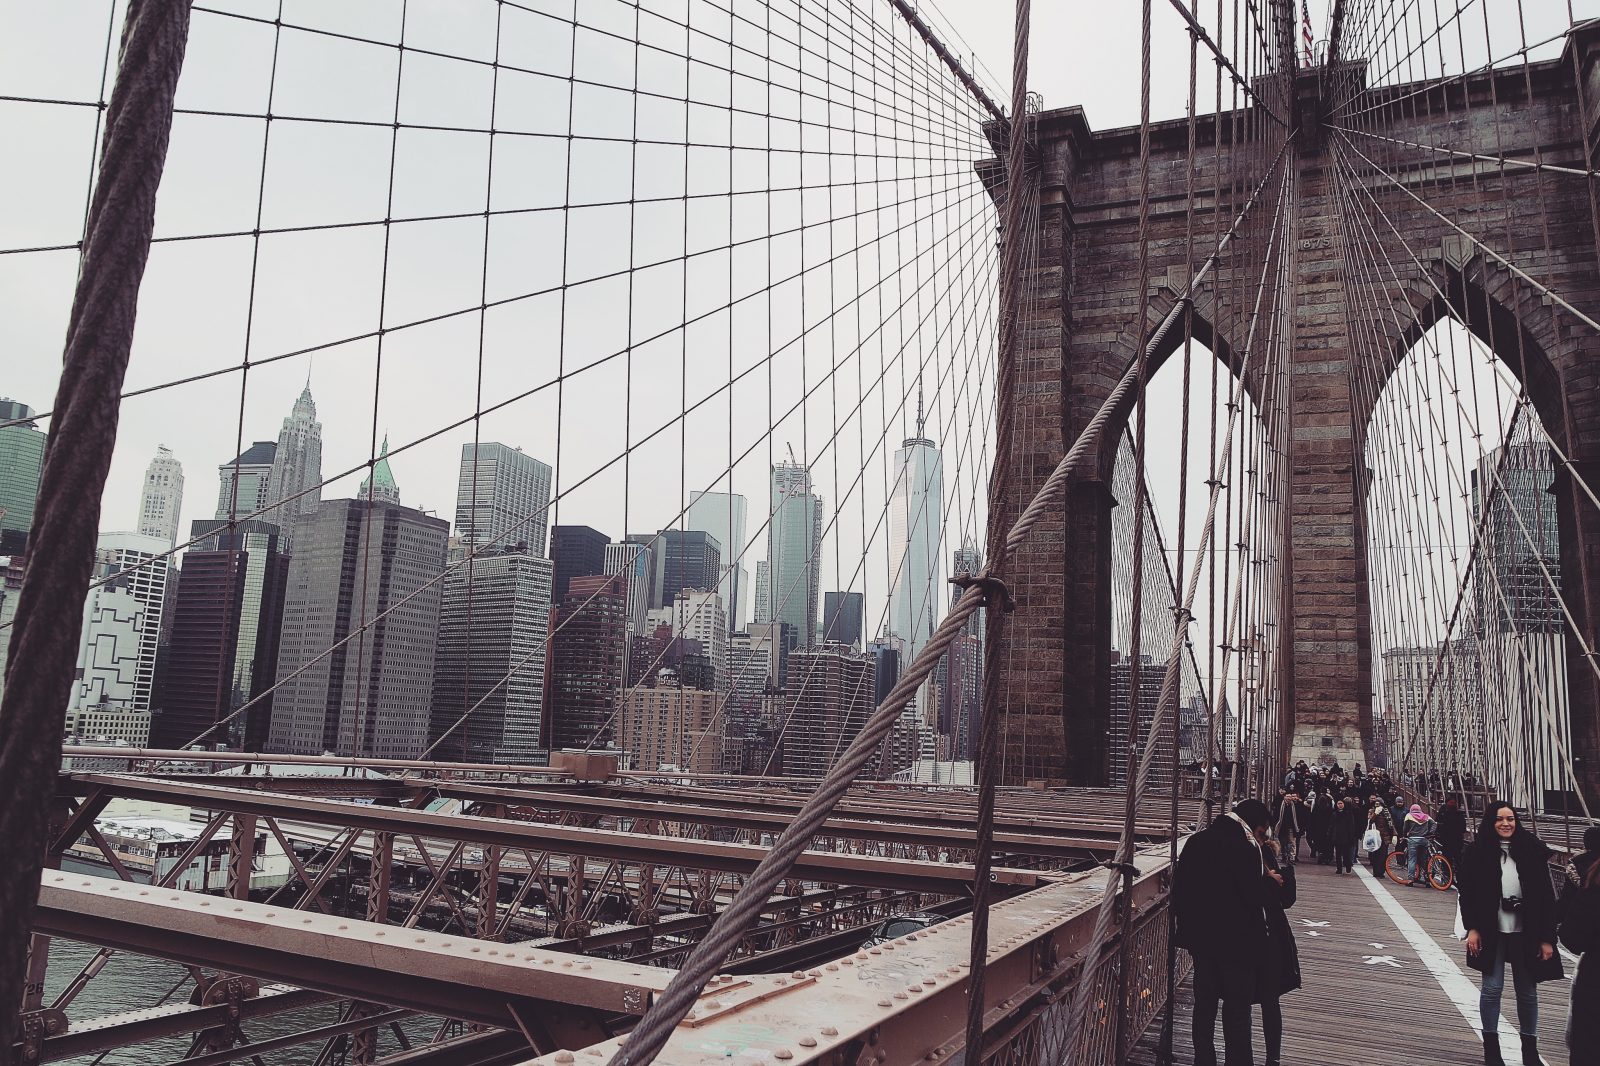 New York in 4 Days - The Brooklyn Bridge